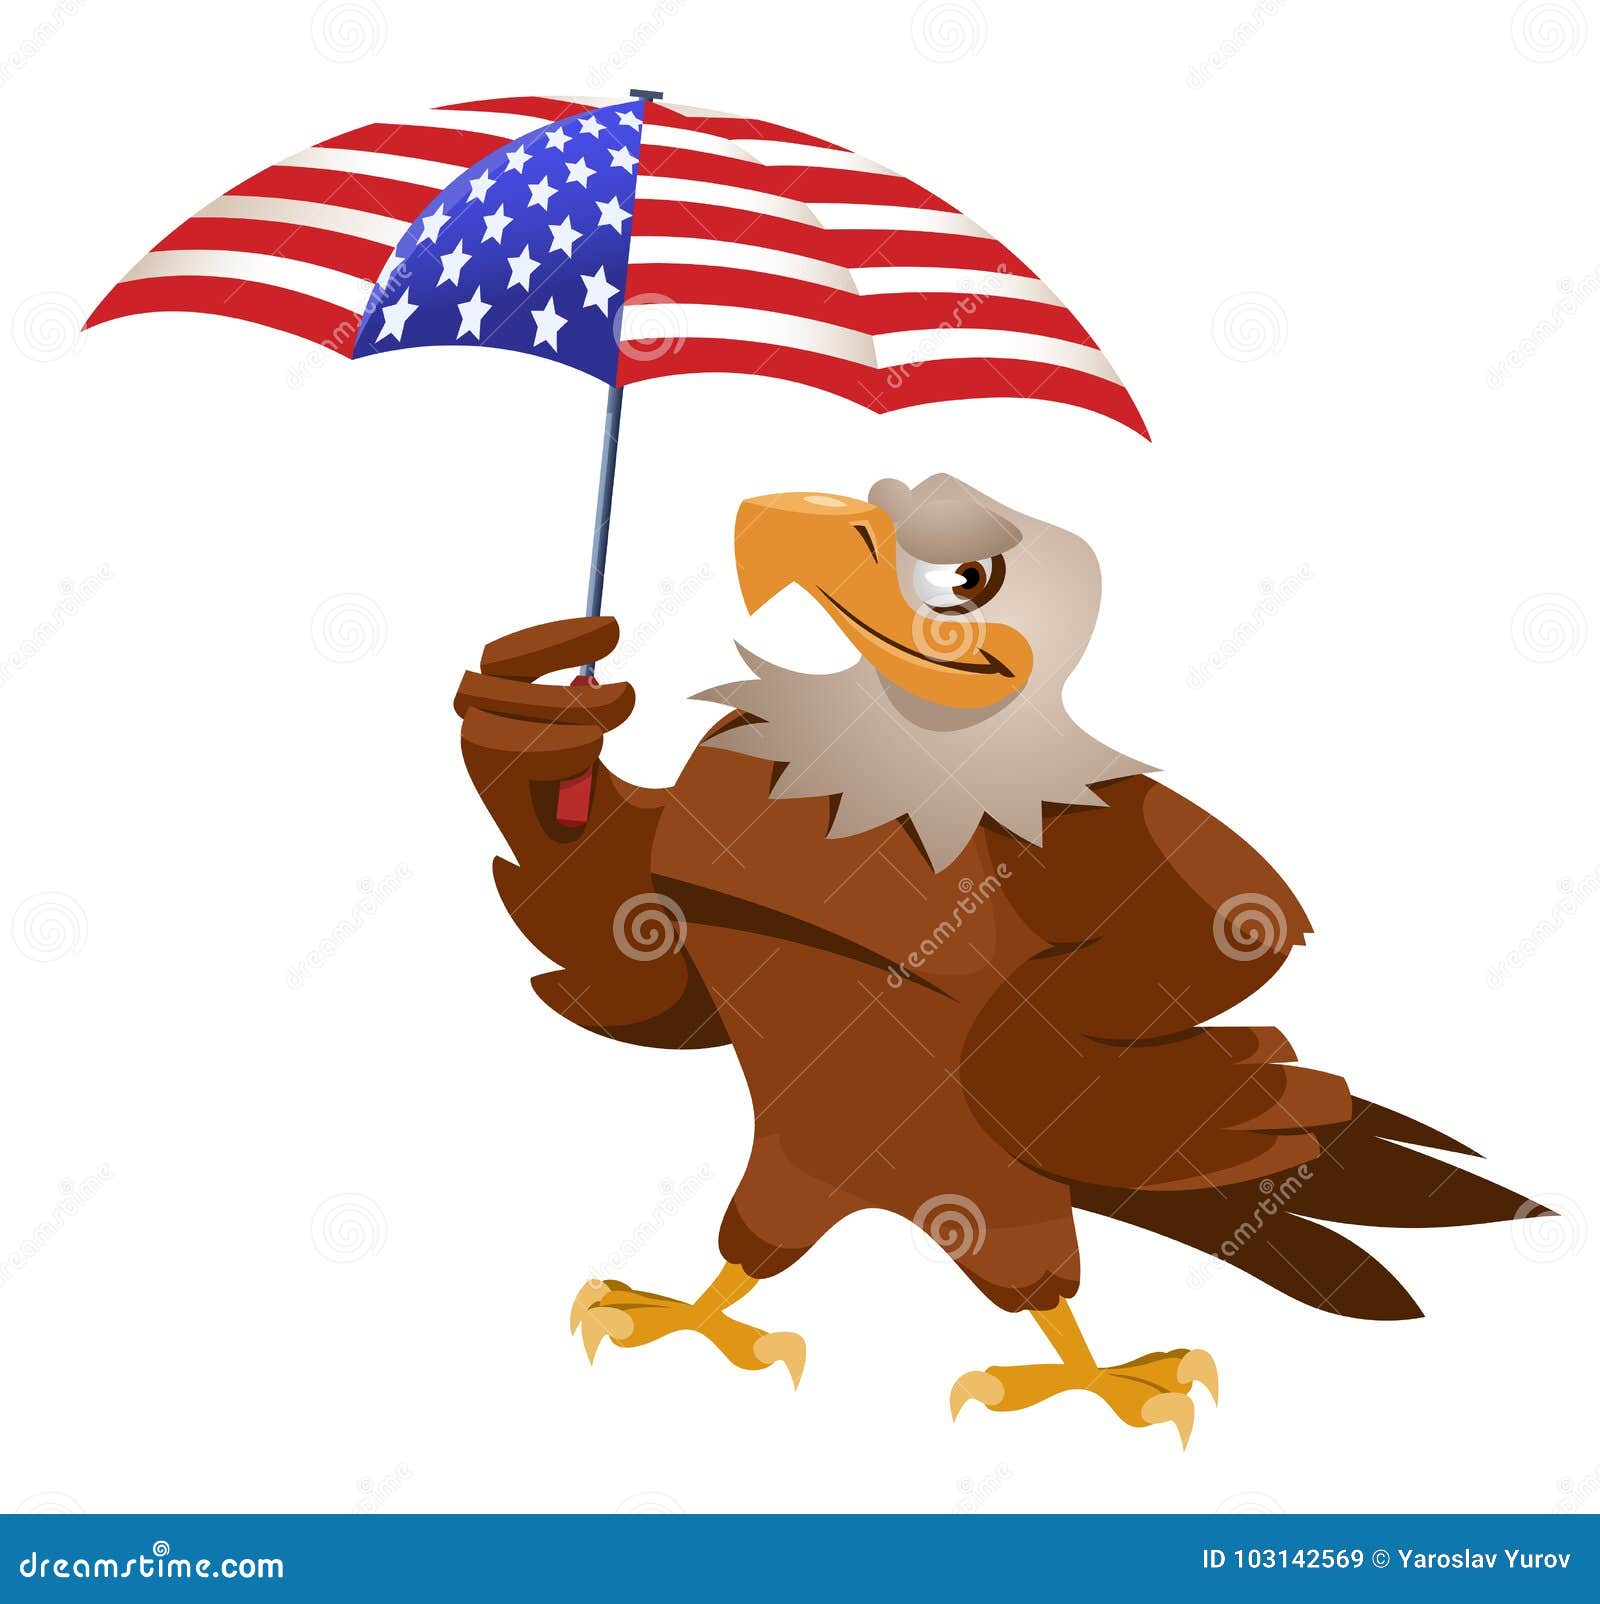 american flag animated clipart fun